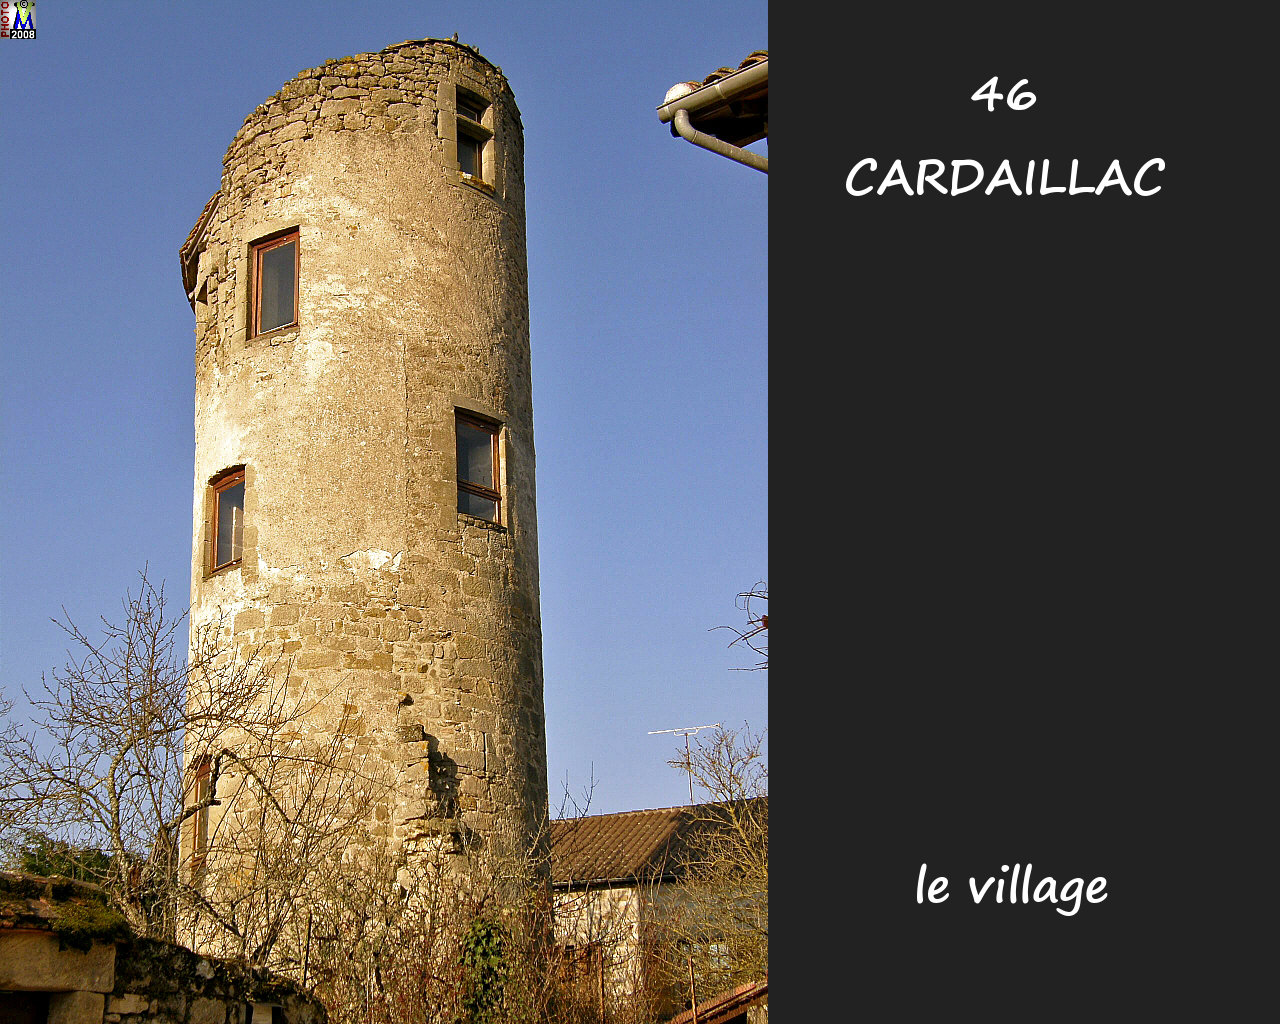 46CARDAILLAC_village_122.jpg